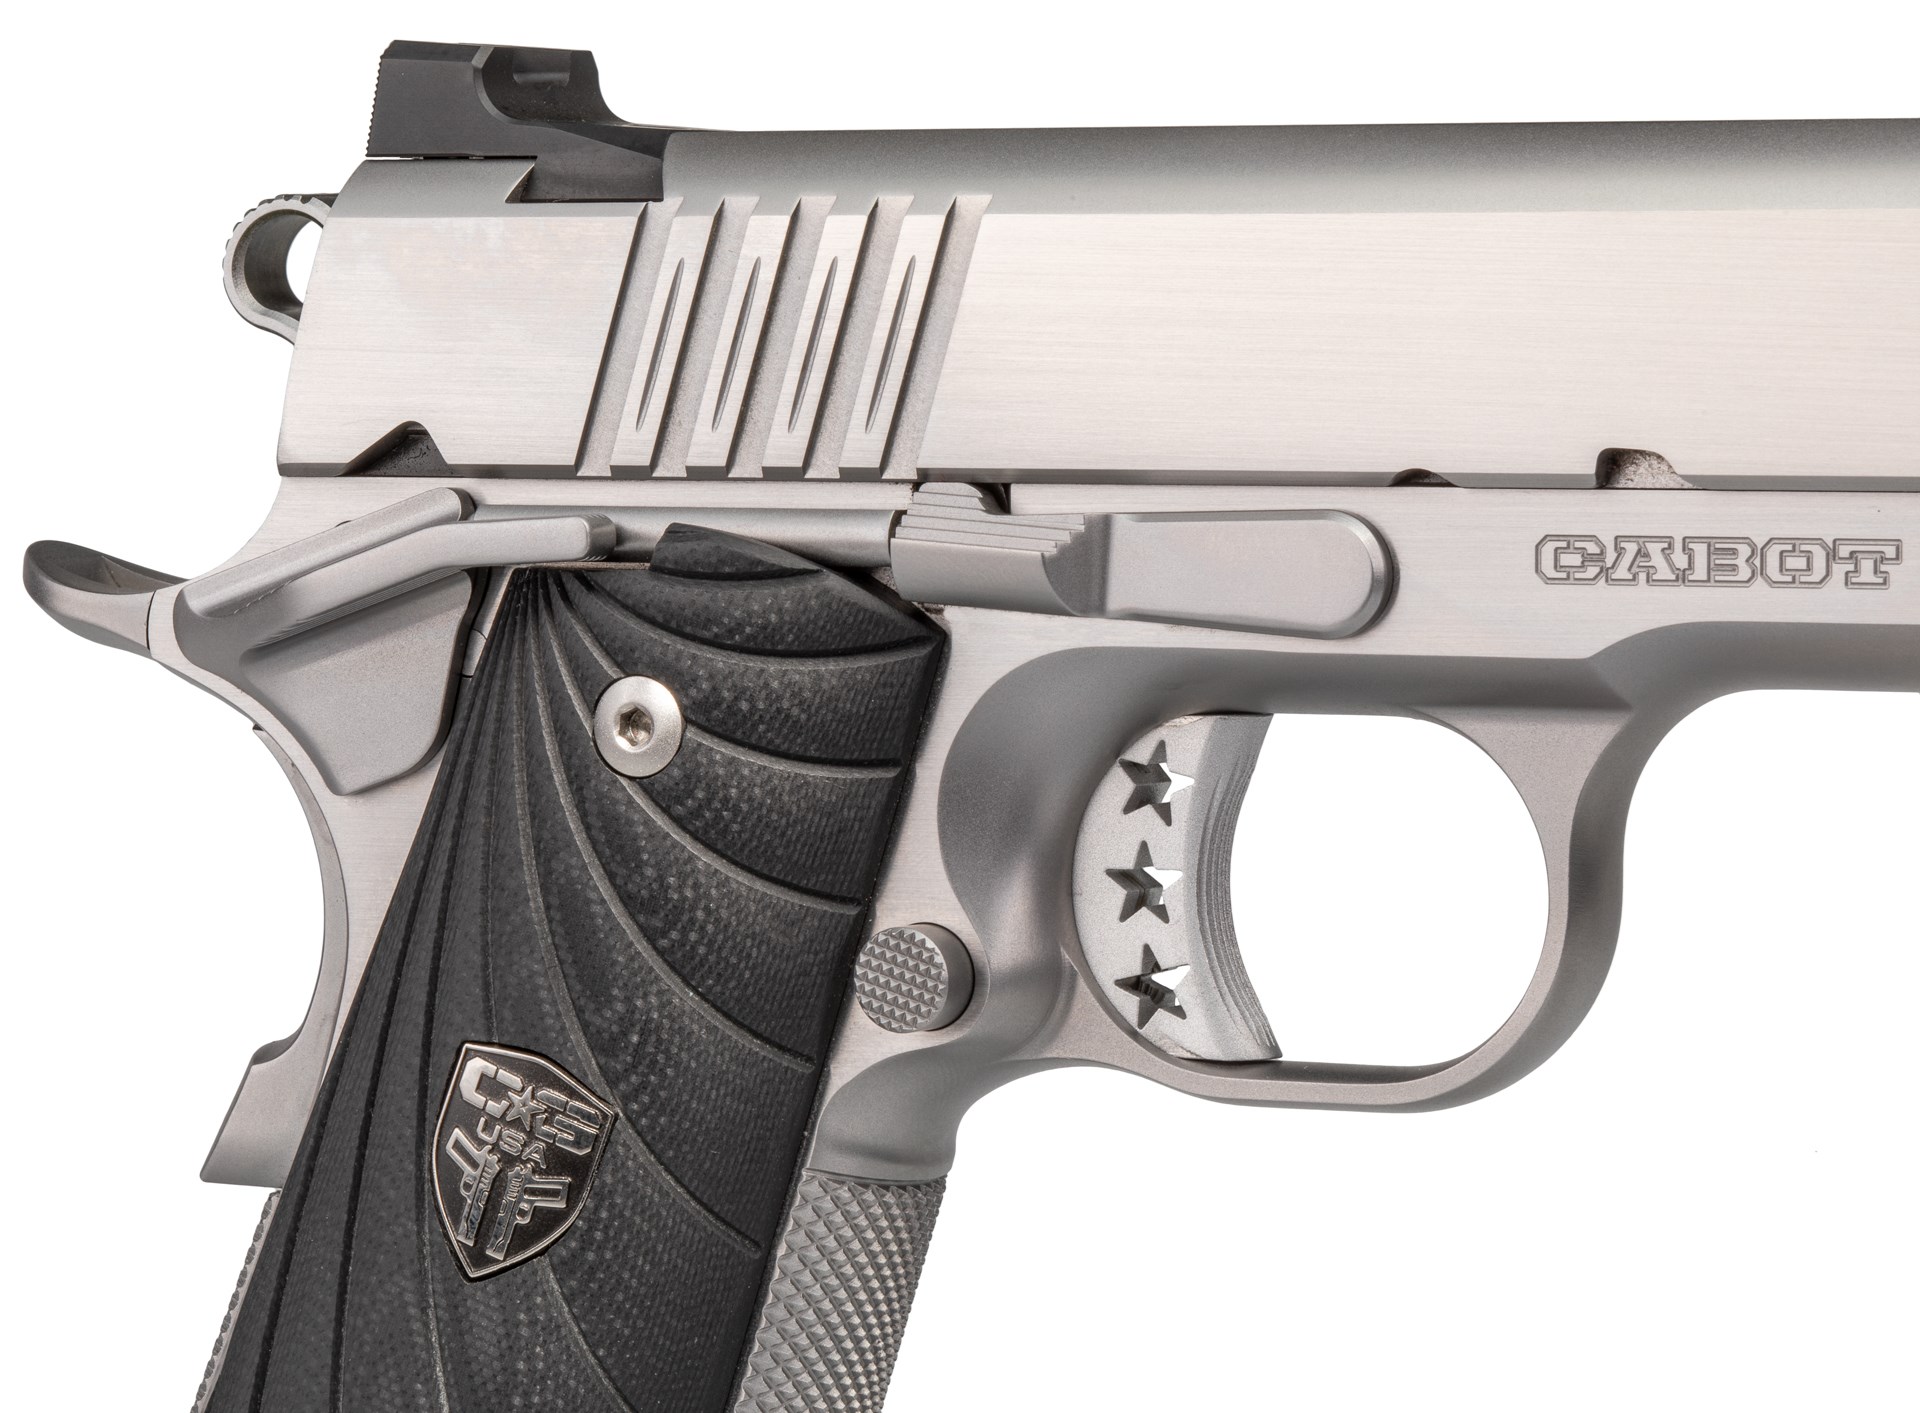 cabot guns southpaw m1911 pistol handgun on white closeup detail focus on tirgger and right-side g10 black stocks